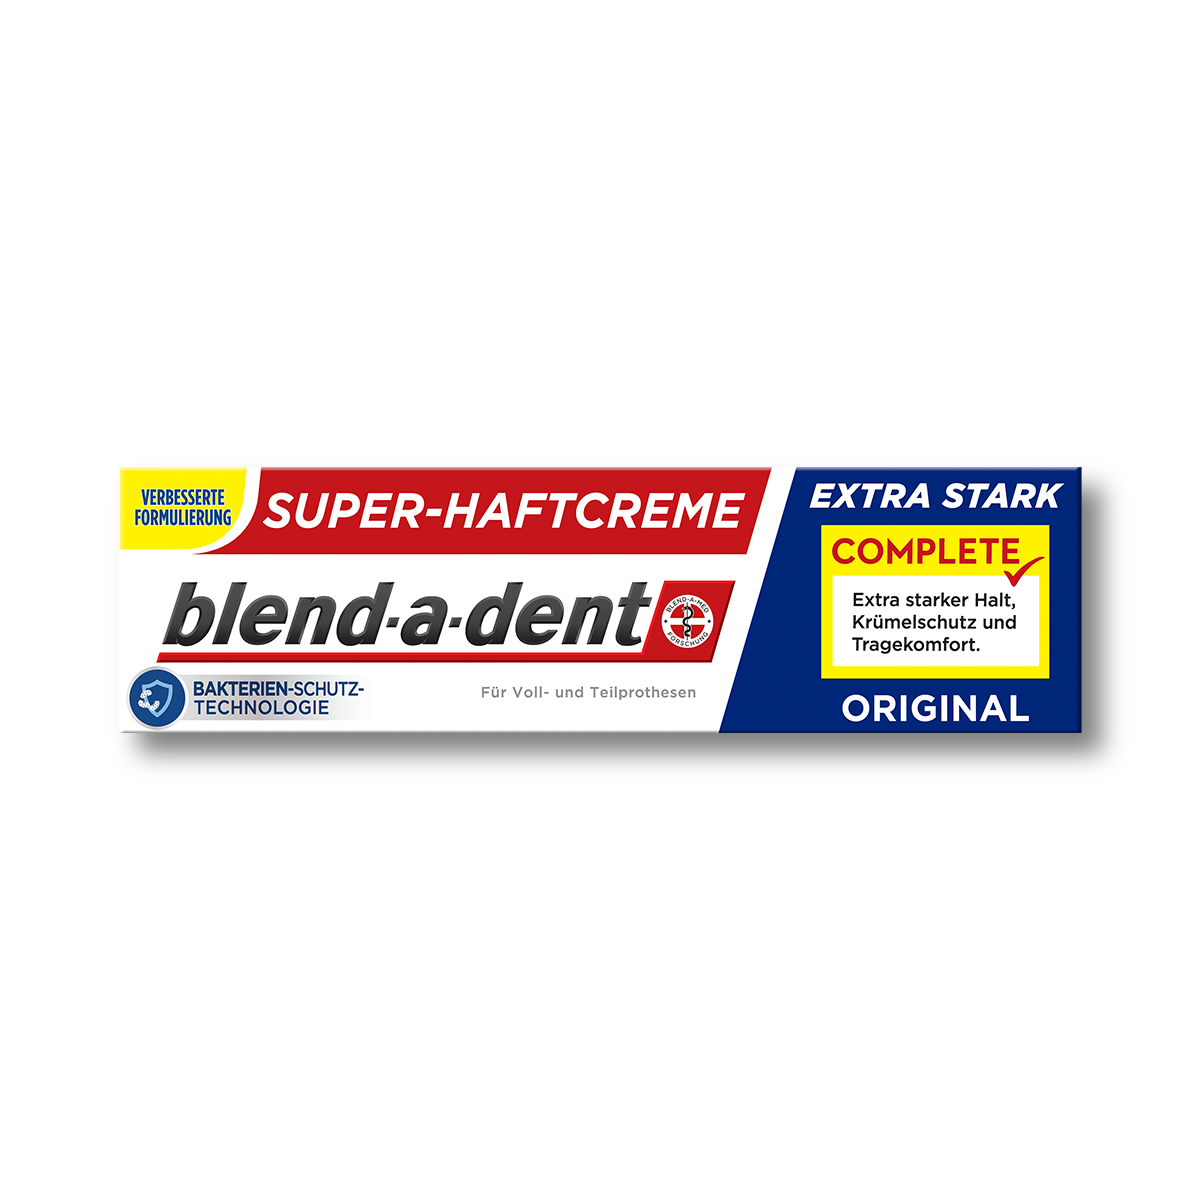 blend-a-dent Complete Original Haftcreme